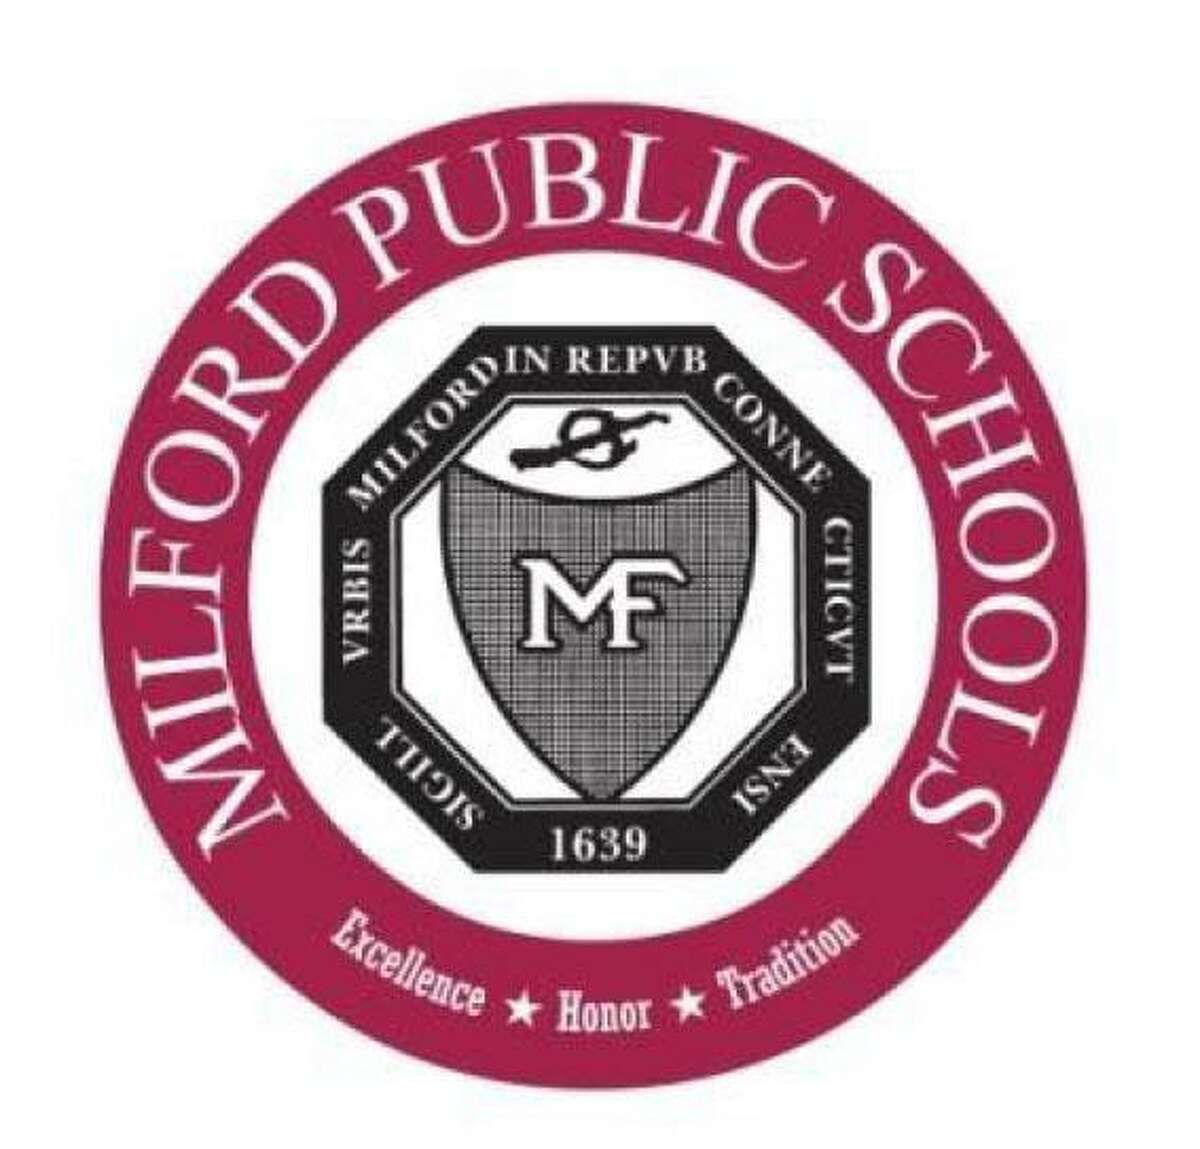 Milford Public Schools